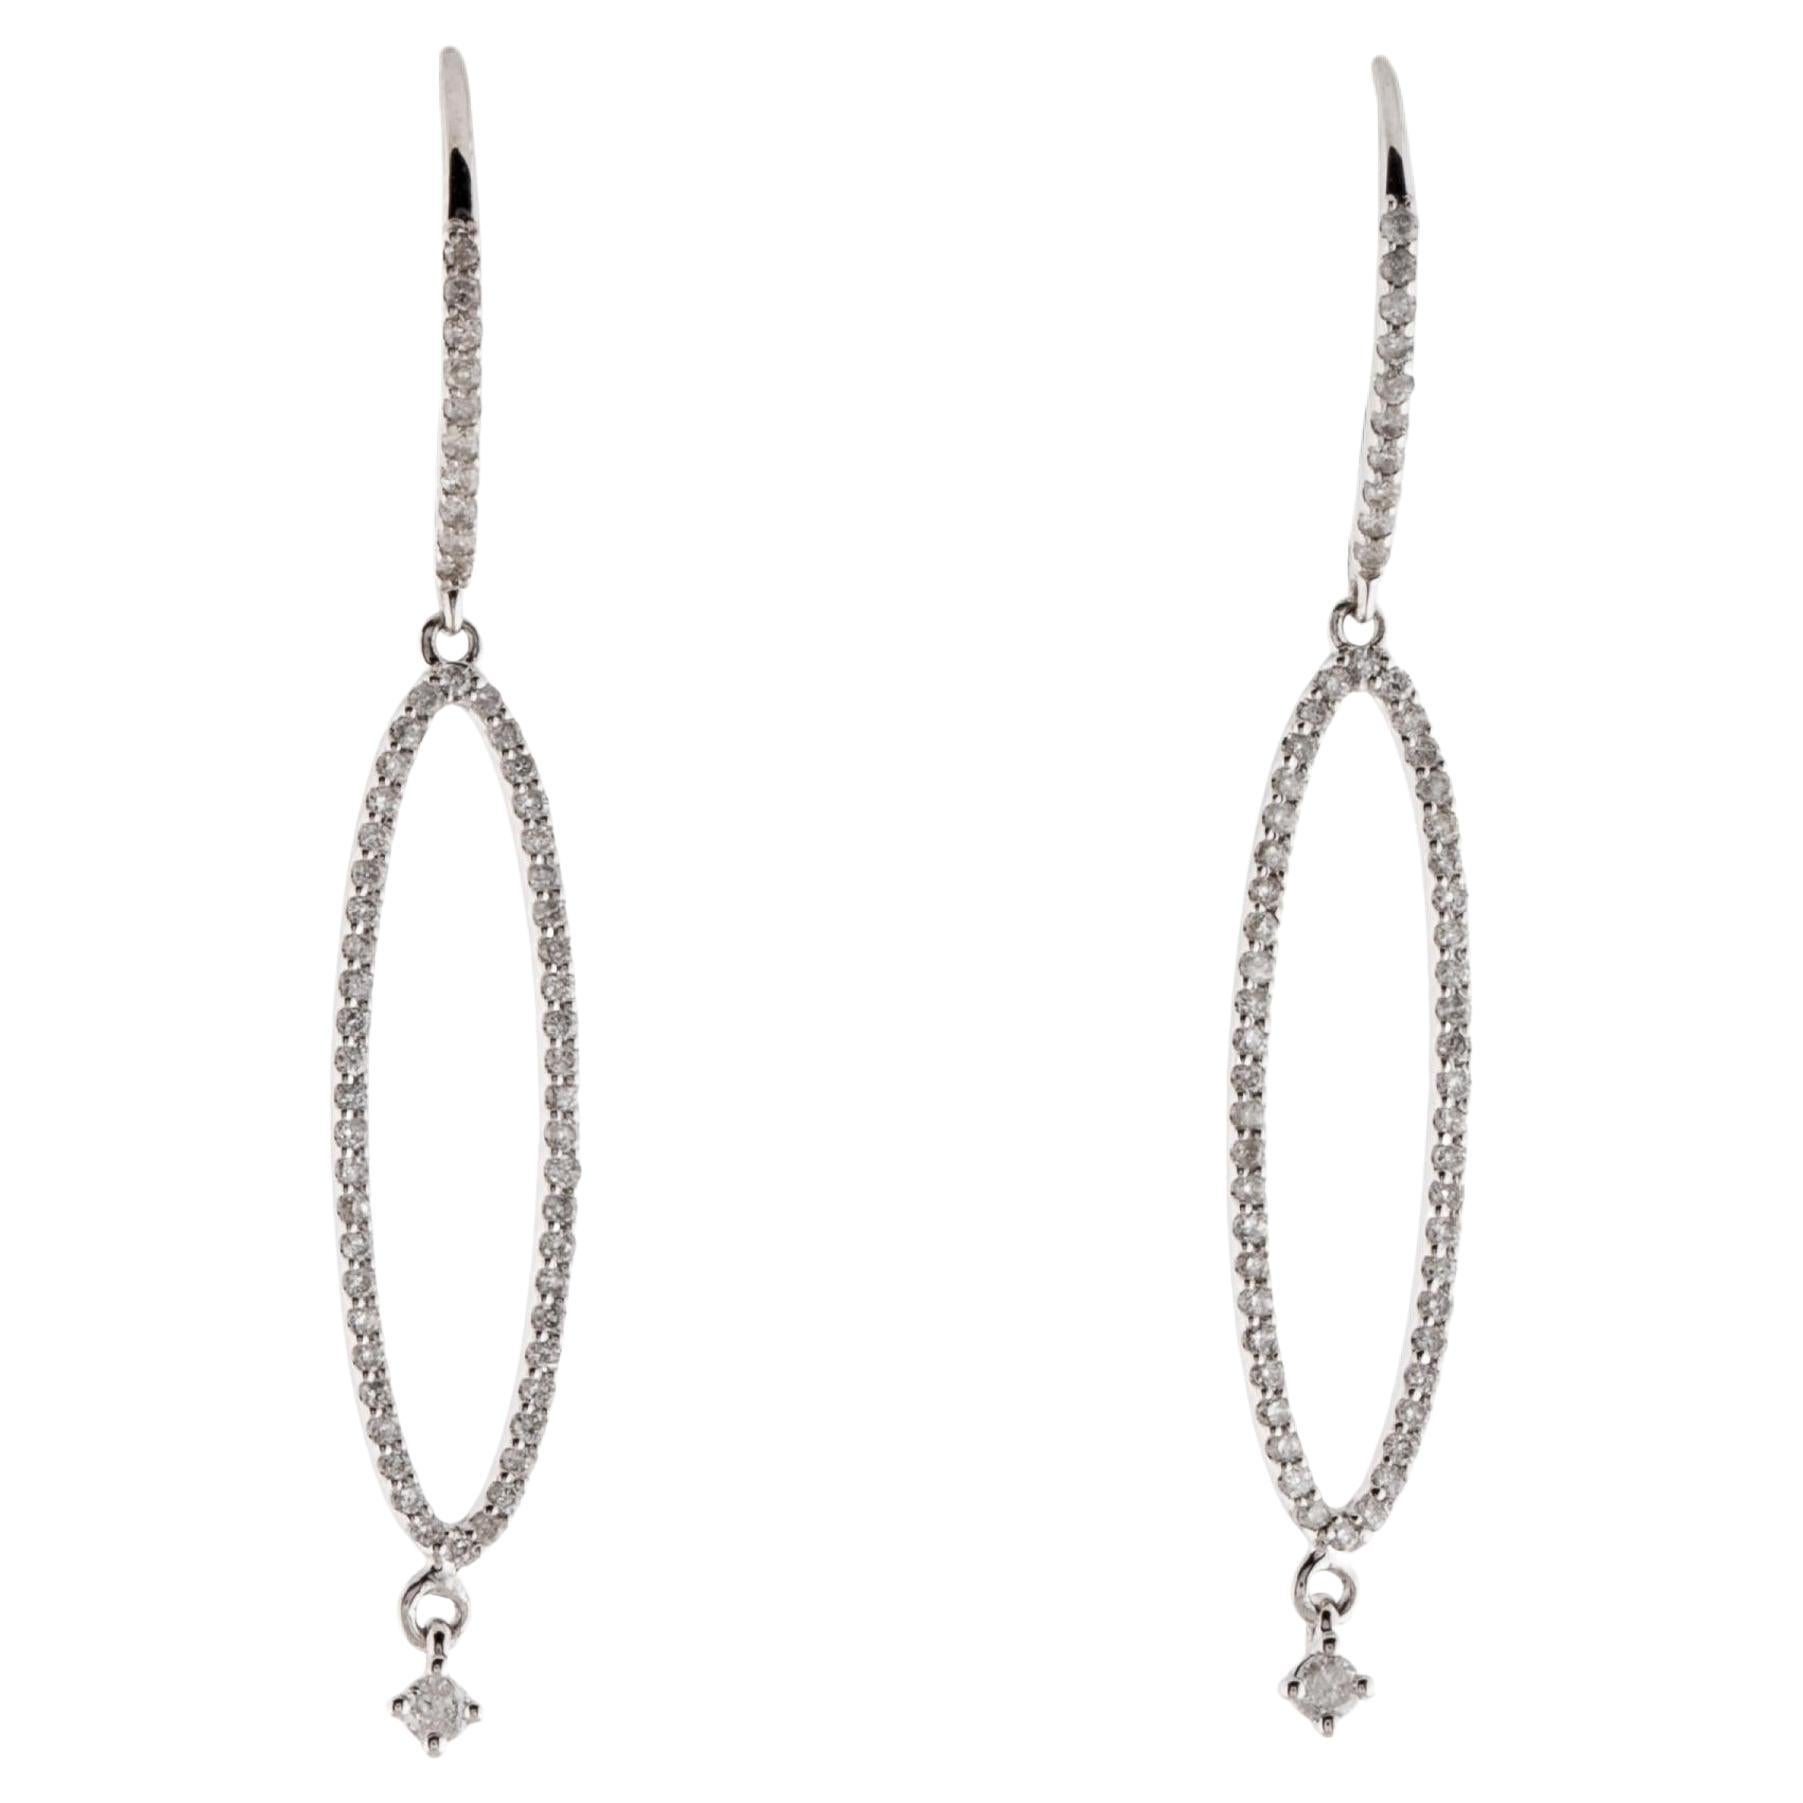 14K Diamond Drop Earrings - Exquisite Sparkle, Timeless Glamour, Elegant Design For Sale